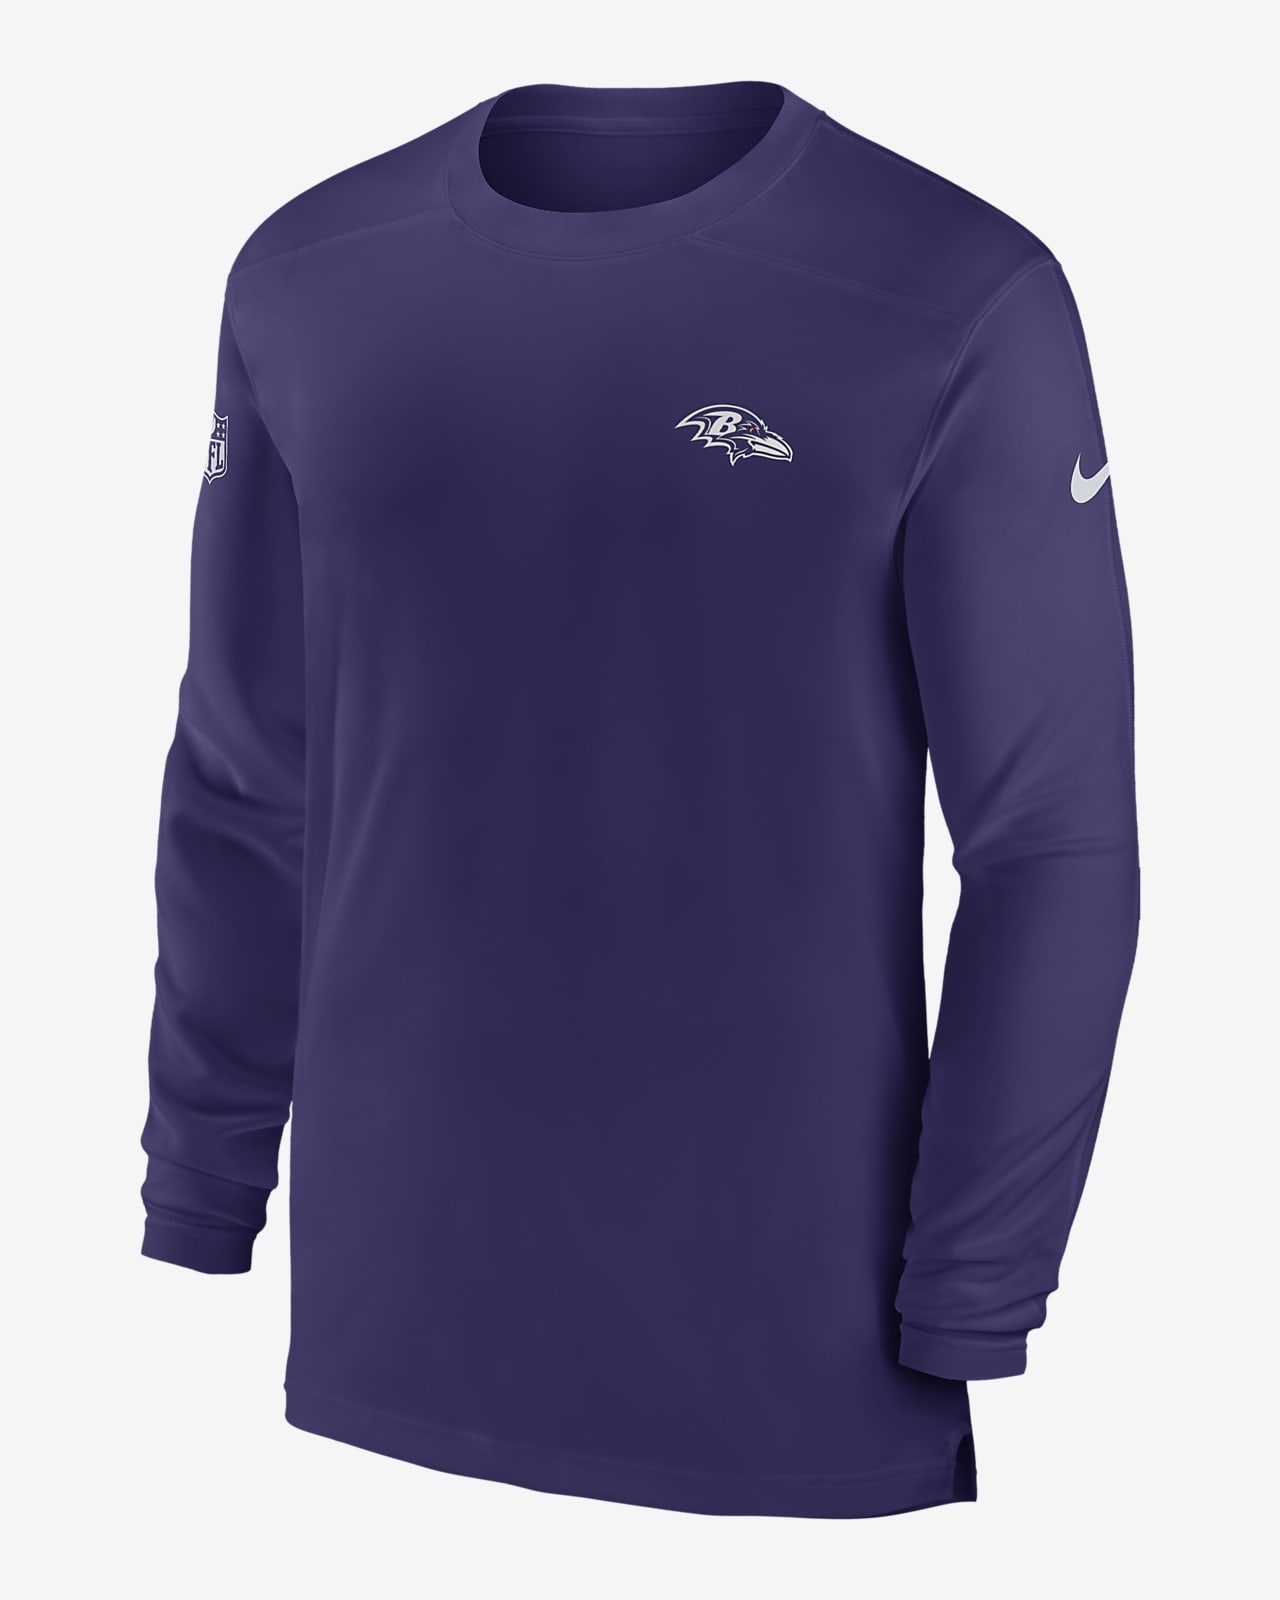 Nike Dri-FIT Sideline Coach (NFL Baltimore Ravens) Men's Long-Sleeve Top